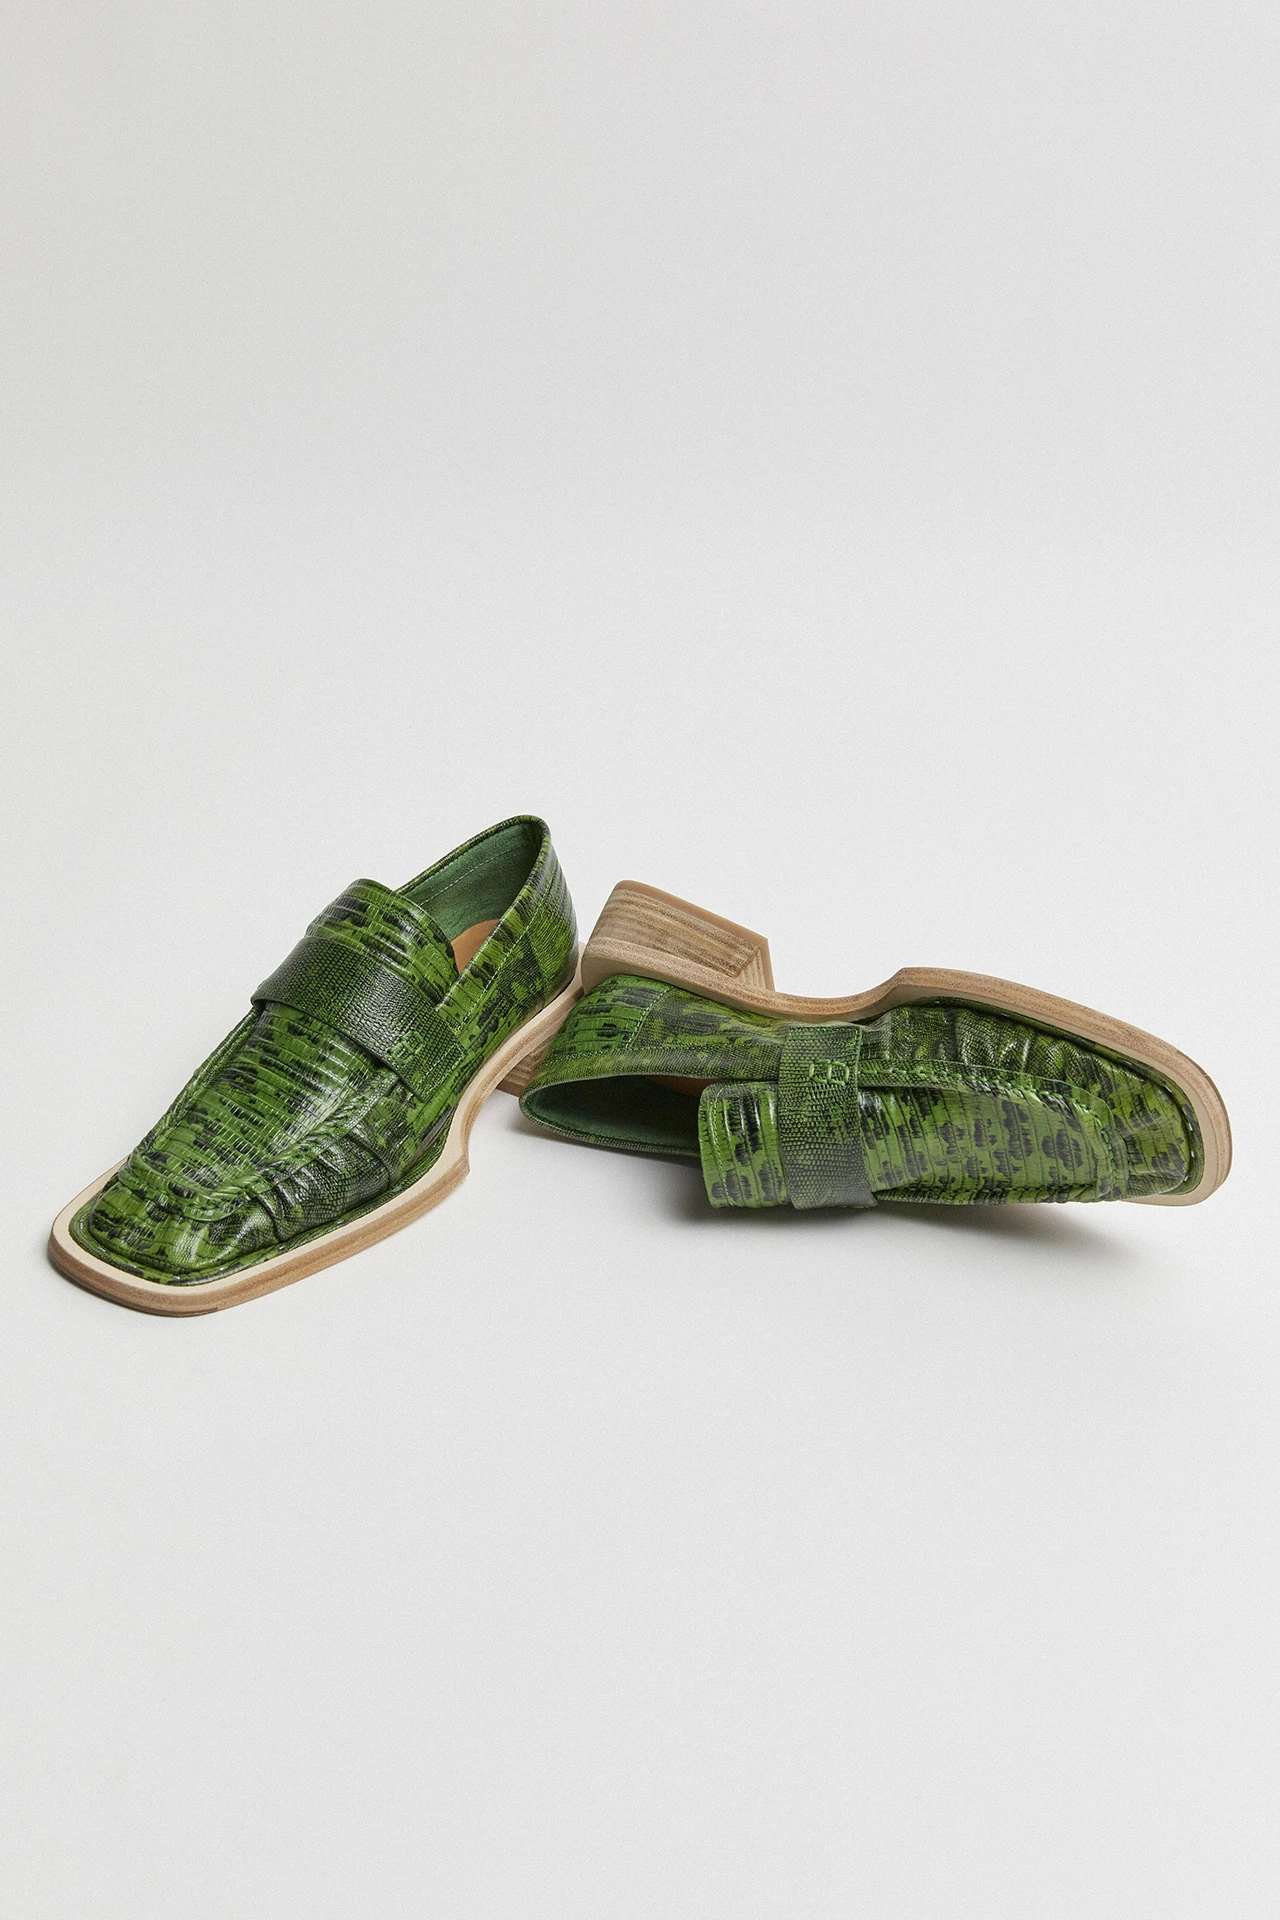 Miista-airi-green-loafers-02